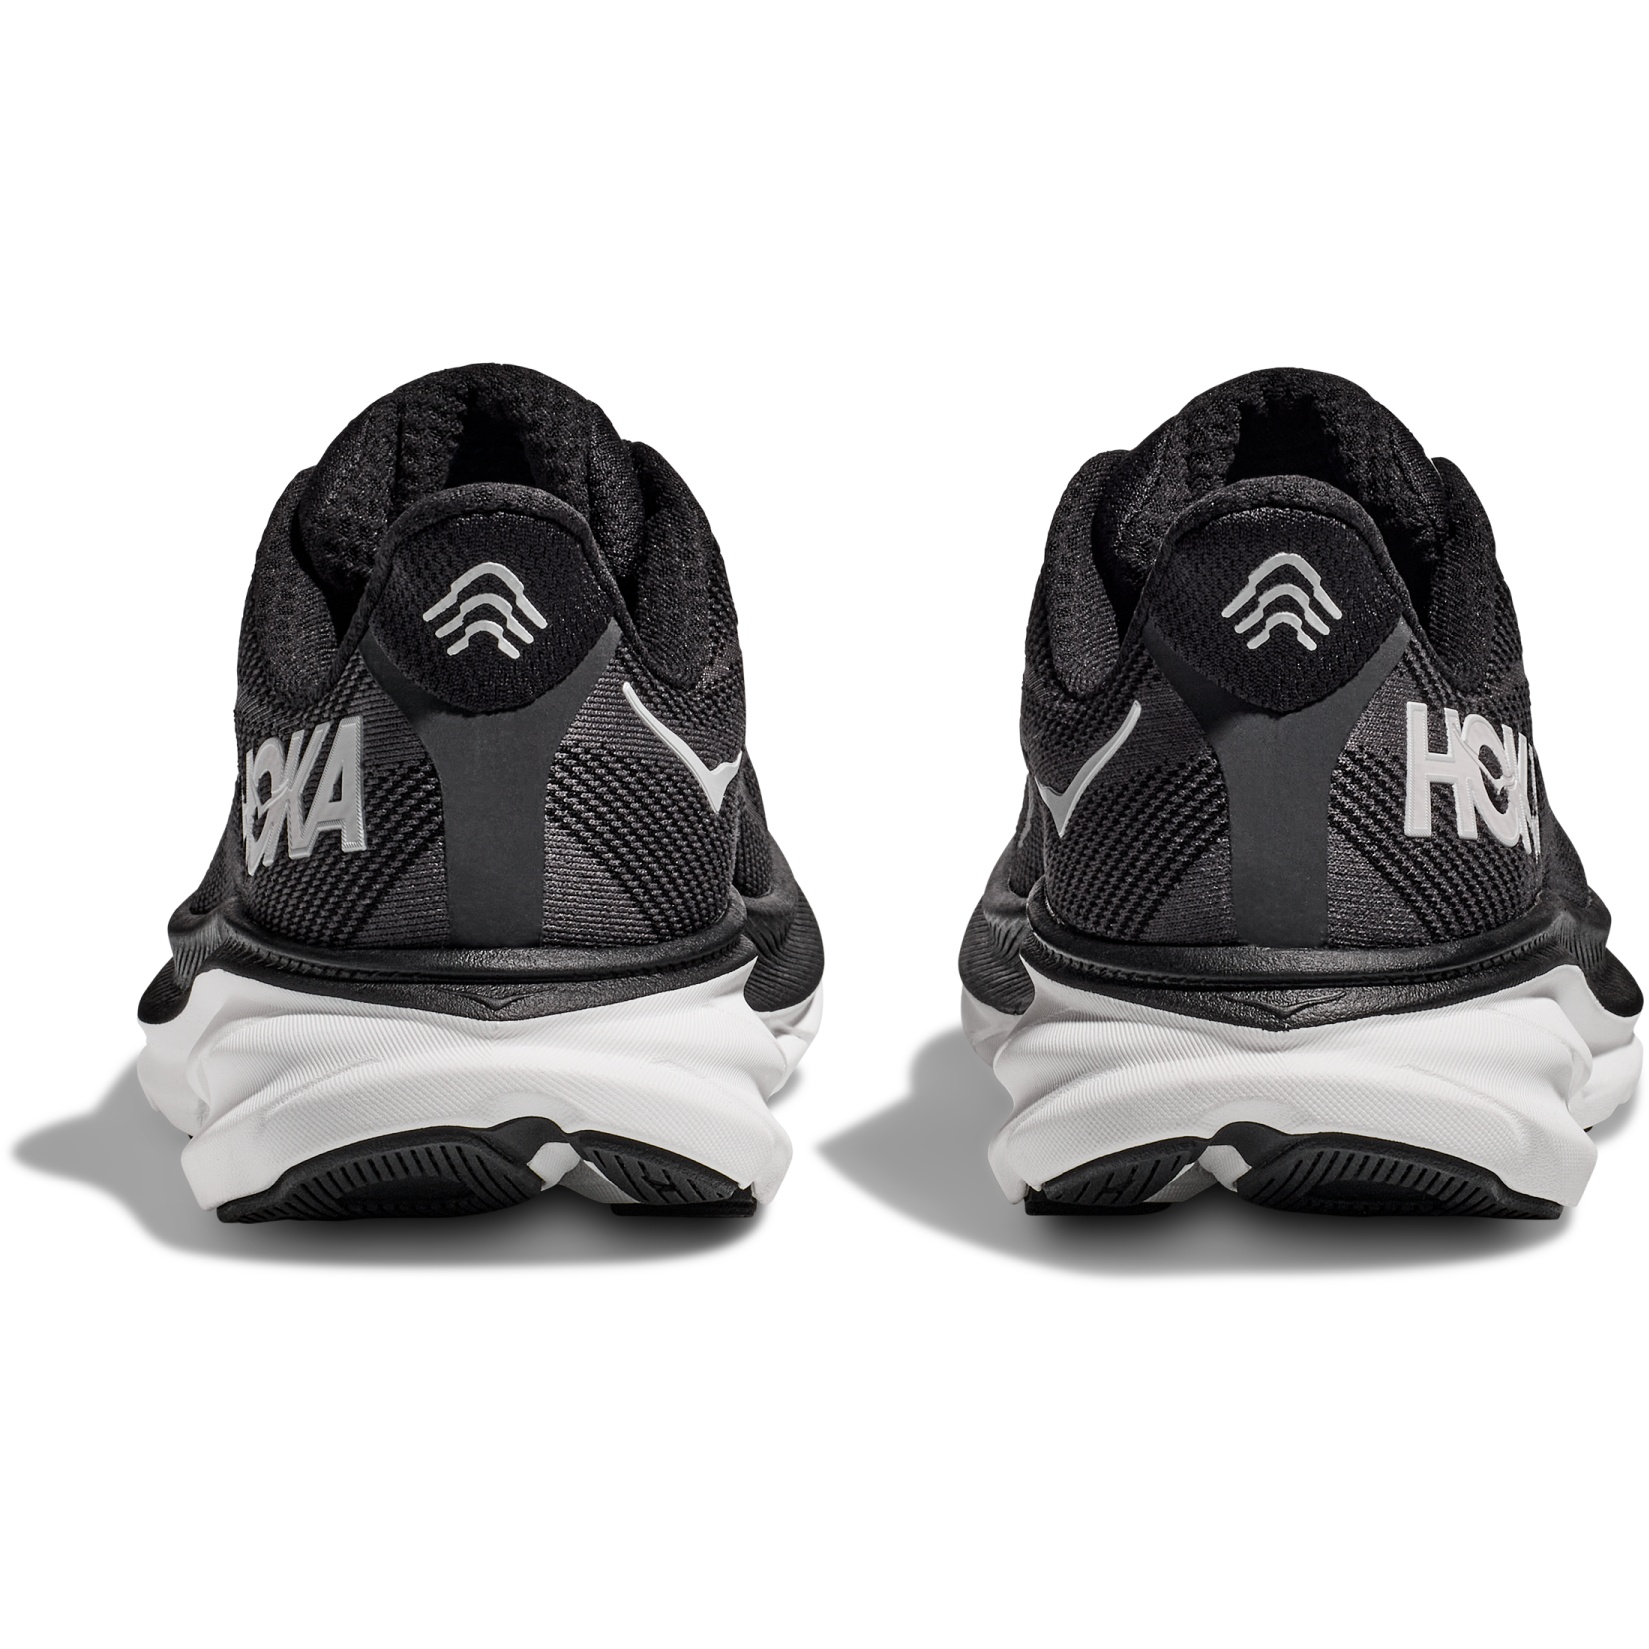 Hoka Chaussures Running Femme - Bondi 8 Wide - noir / blanc - BIKE24